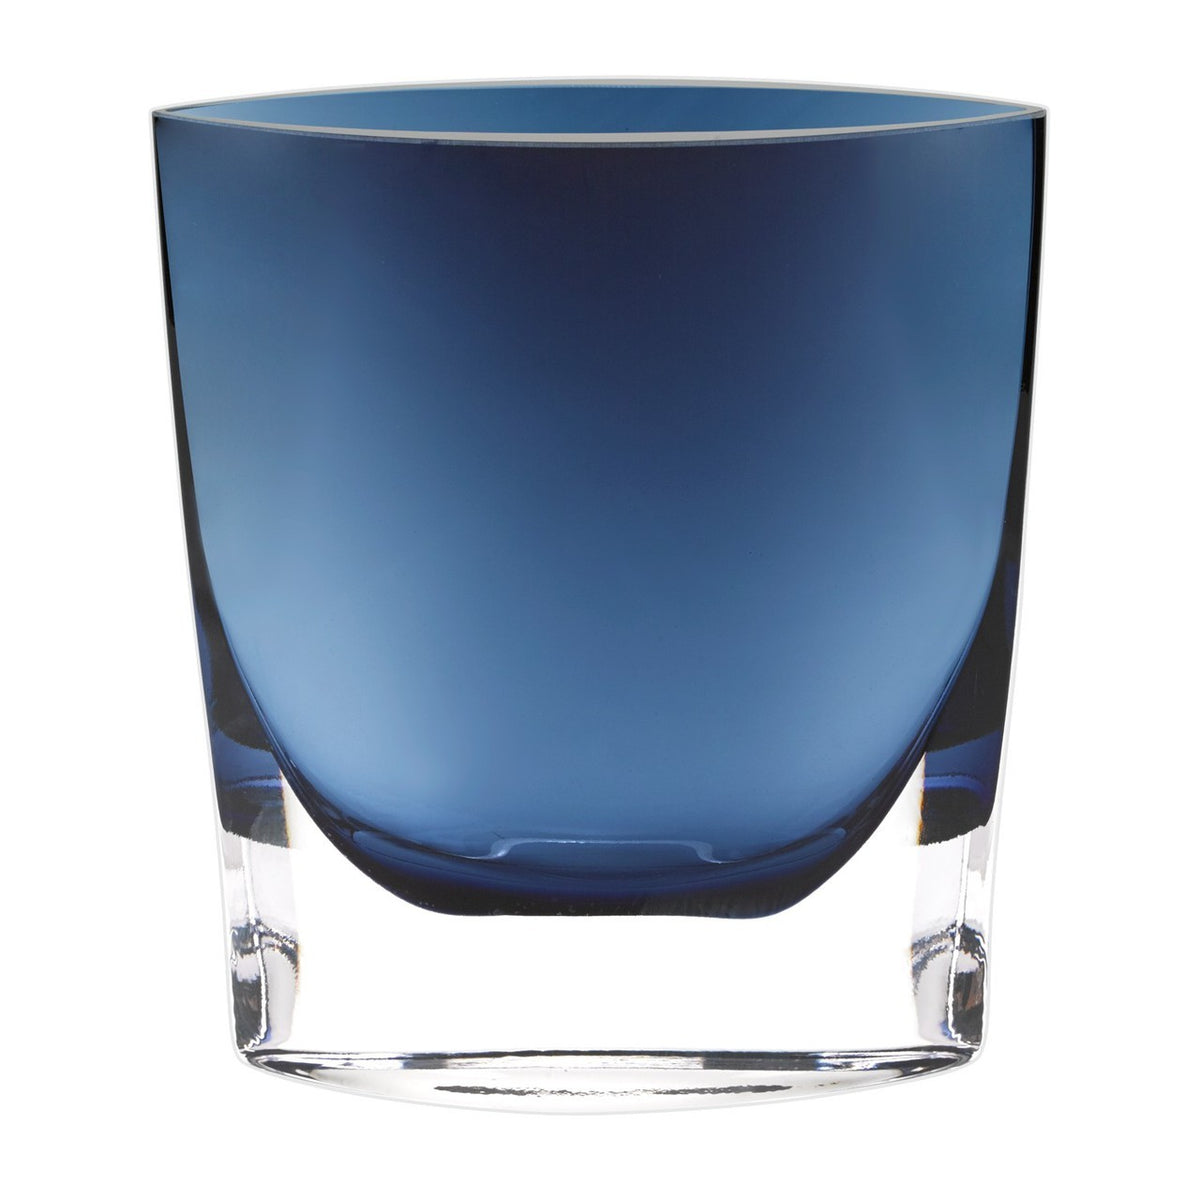 Montego Bay Vase in Midnight Blue